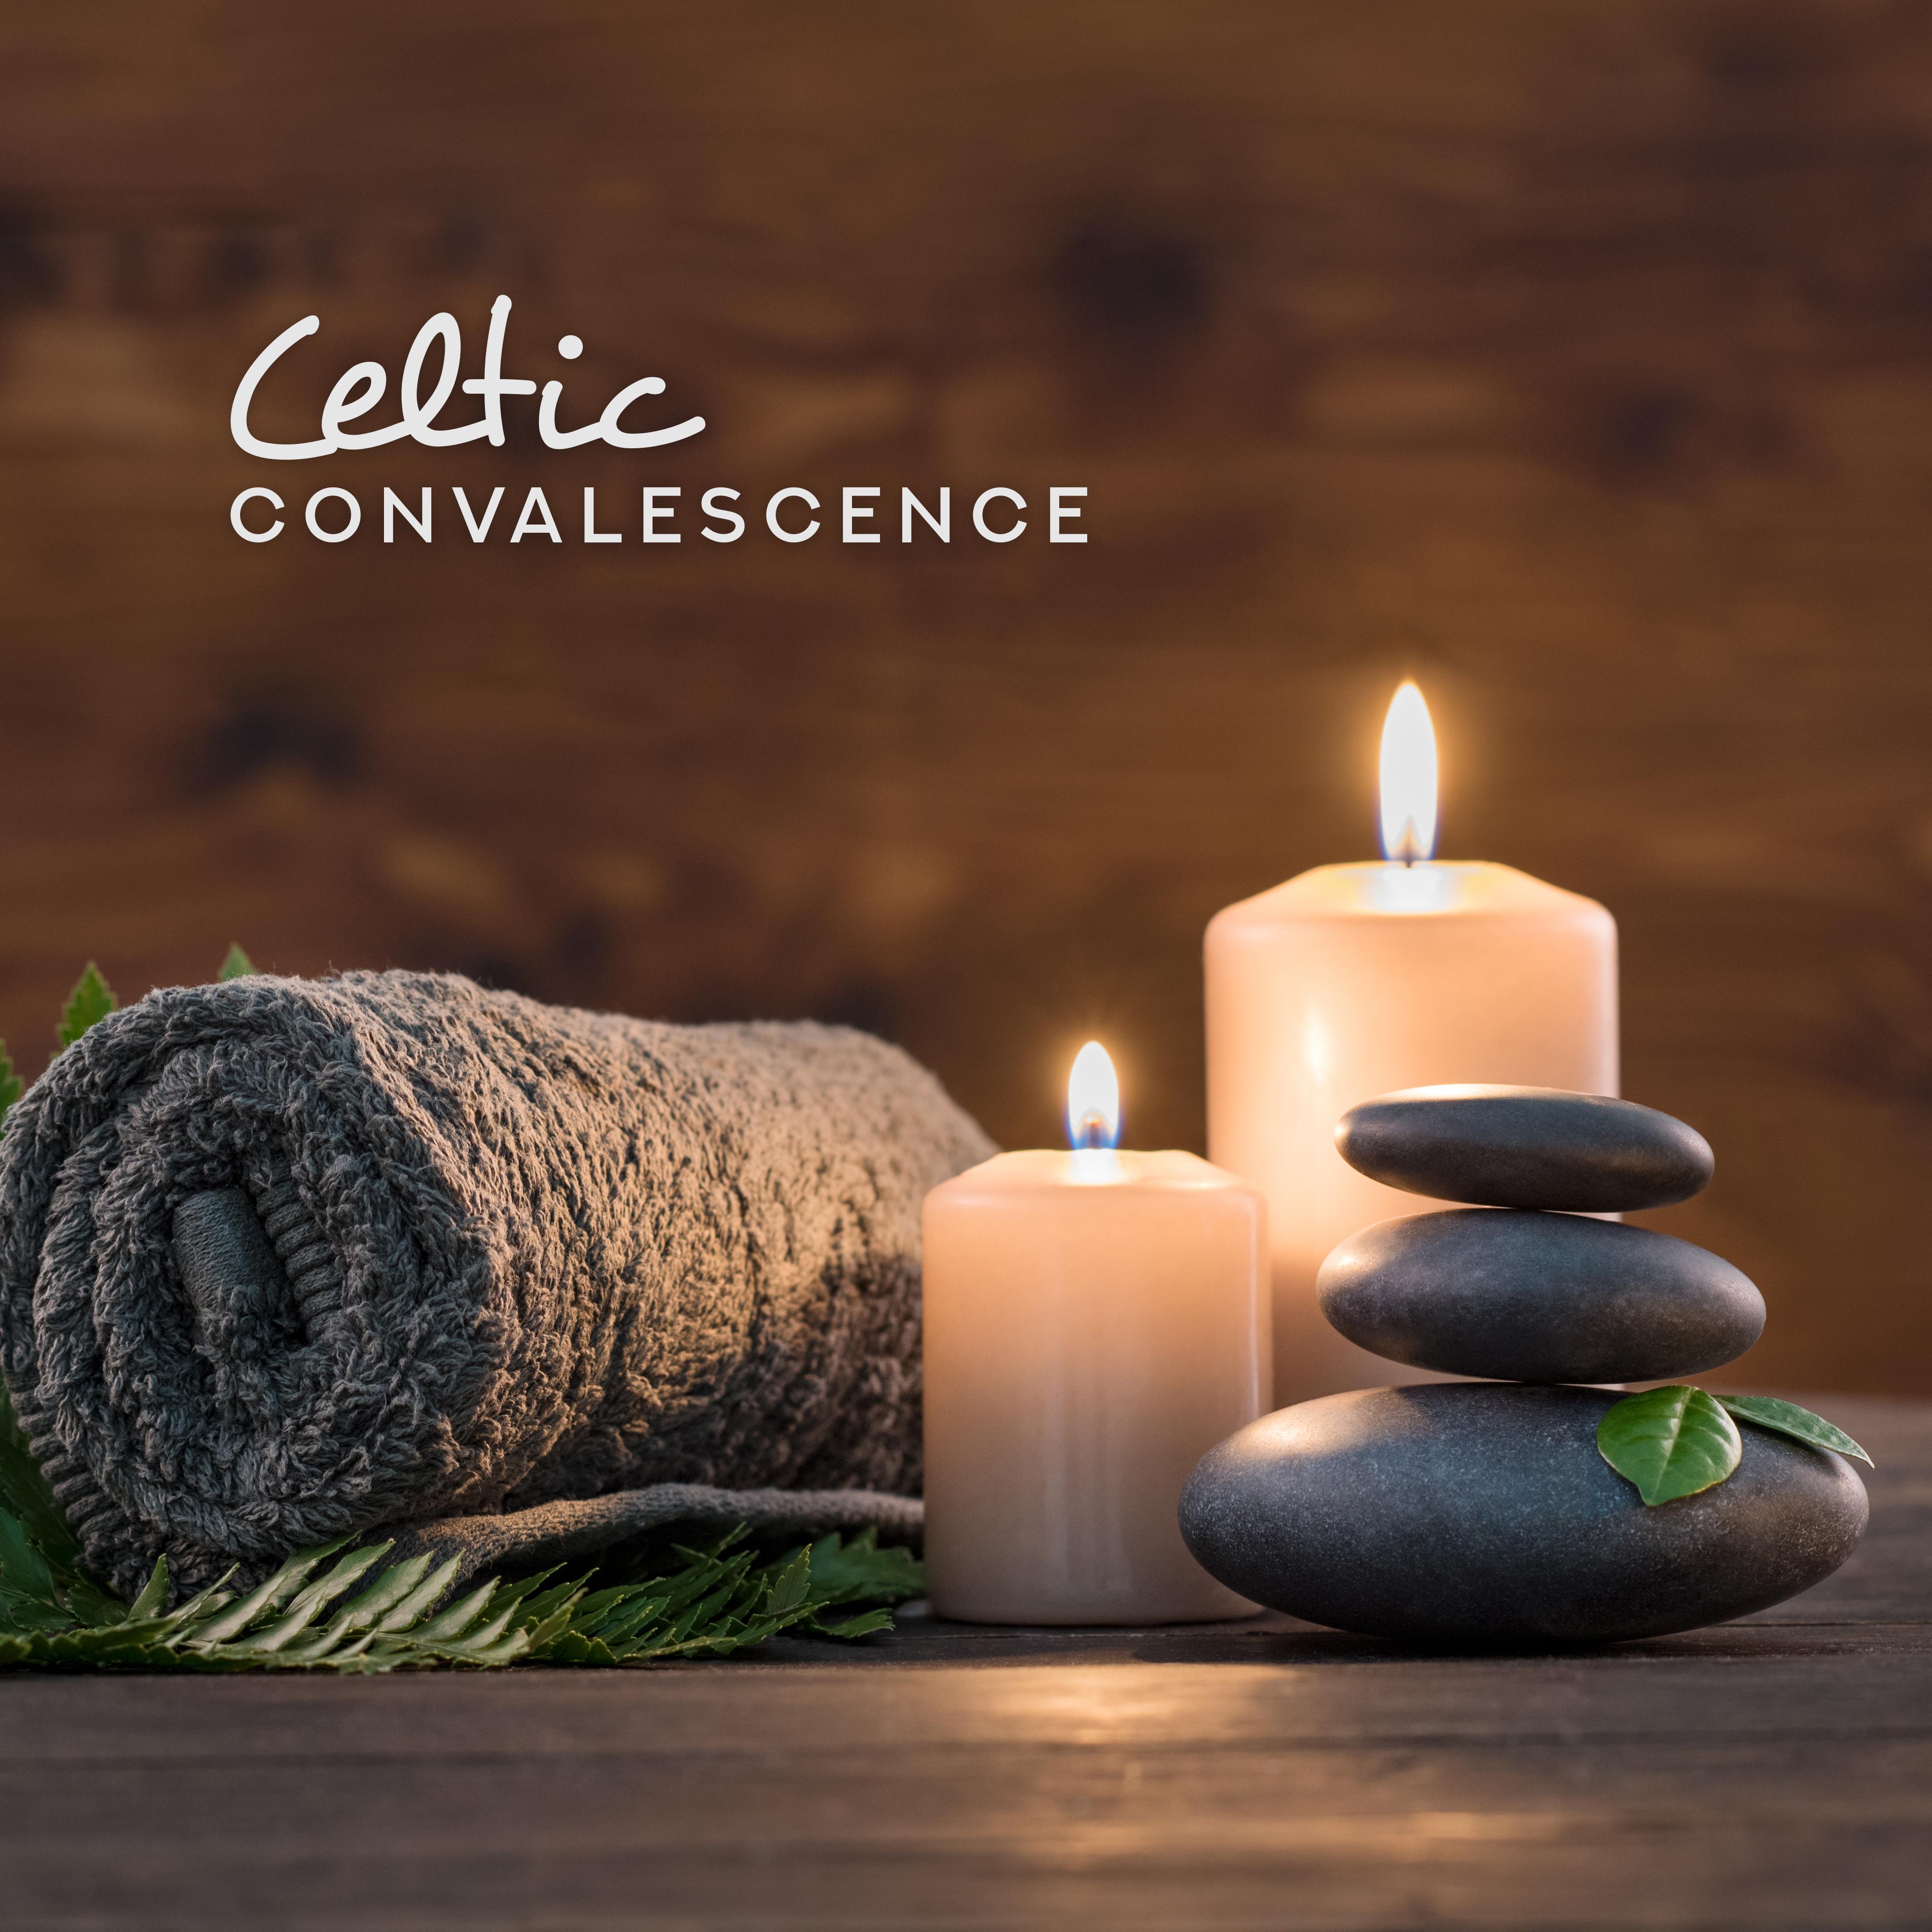 Celtic Convalescence: Spa Music, Massage, Healing, Beauty and Rejuvenating Treatments